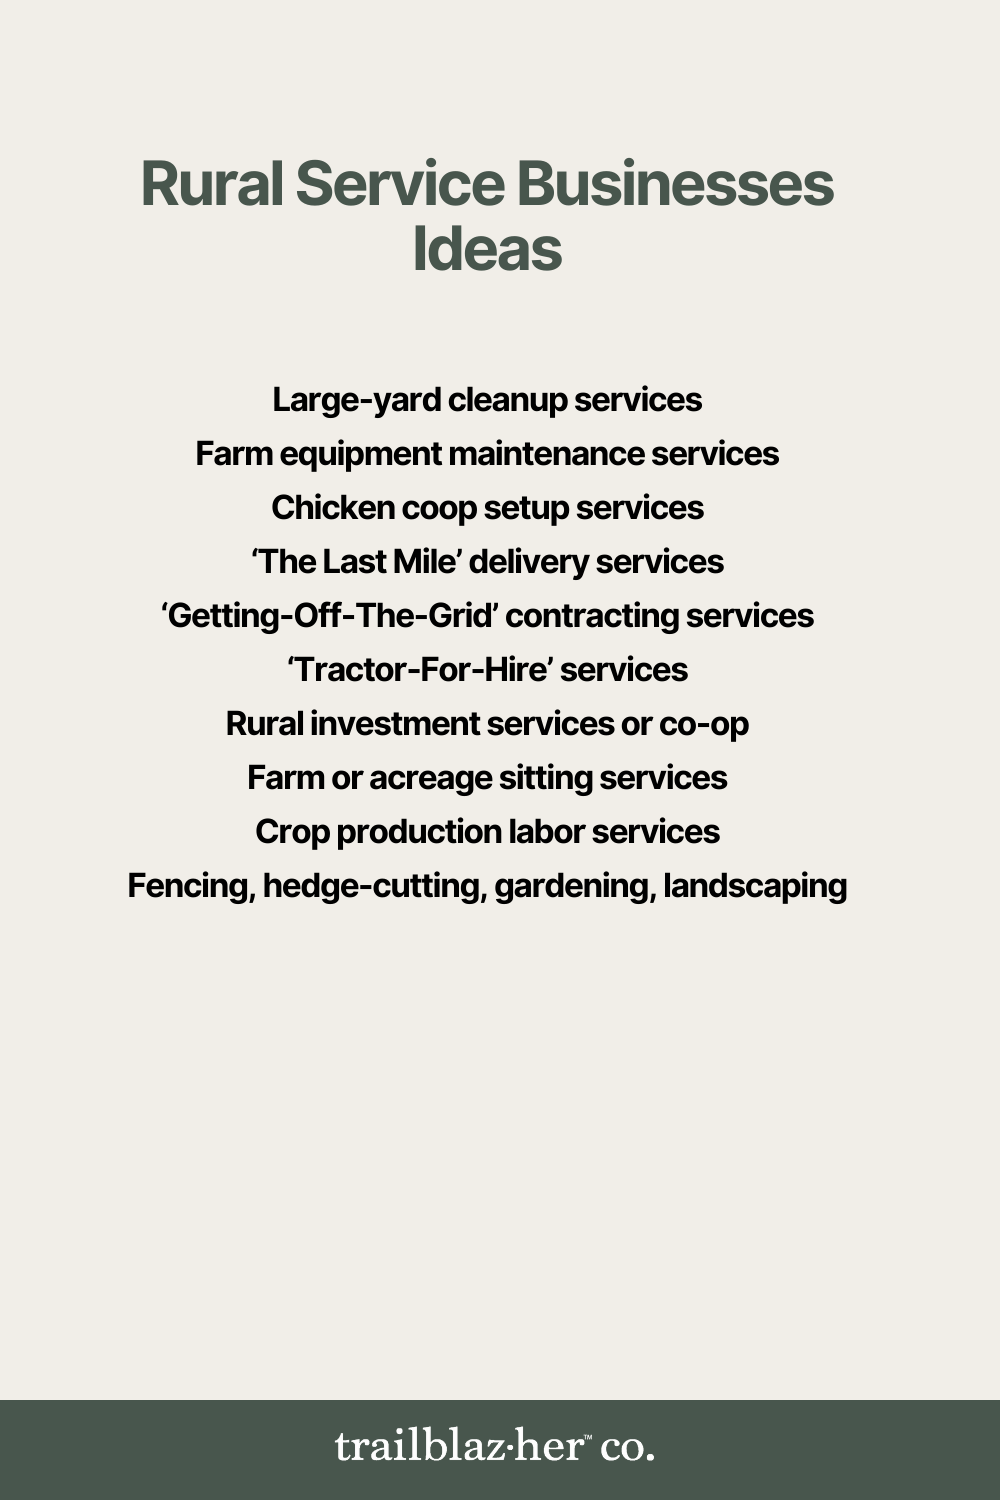 Rural Service Business Ideas